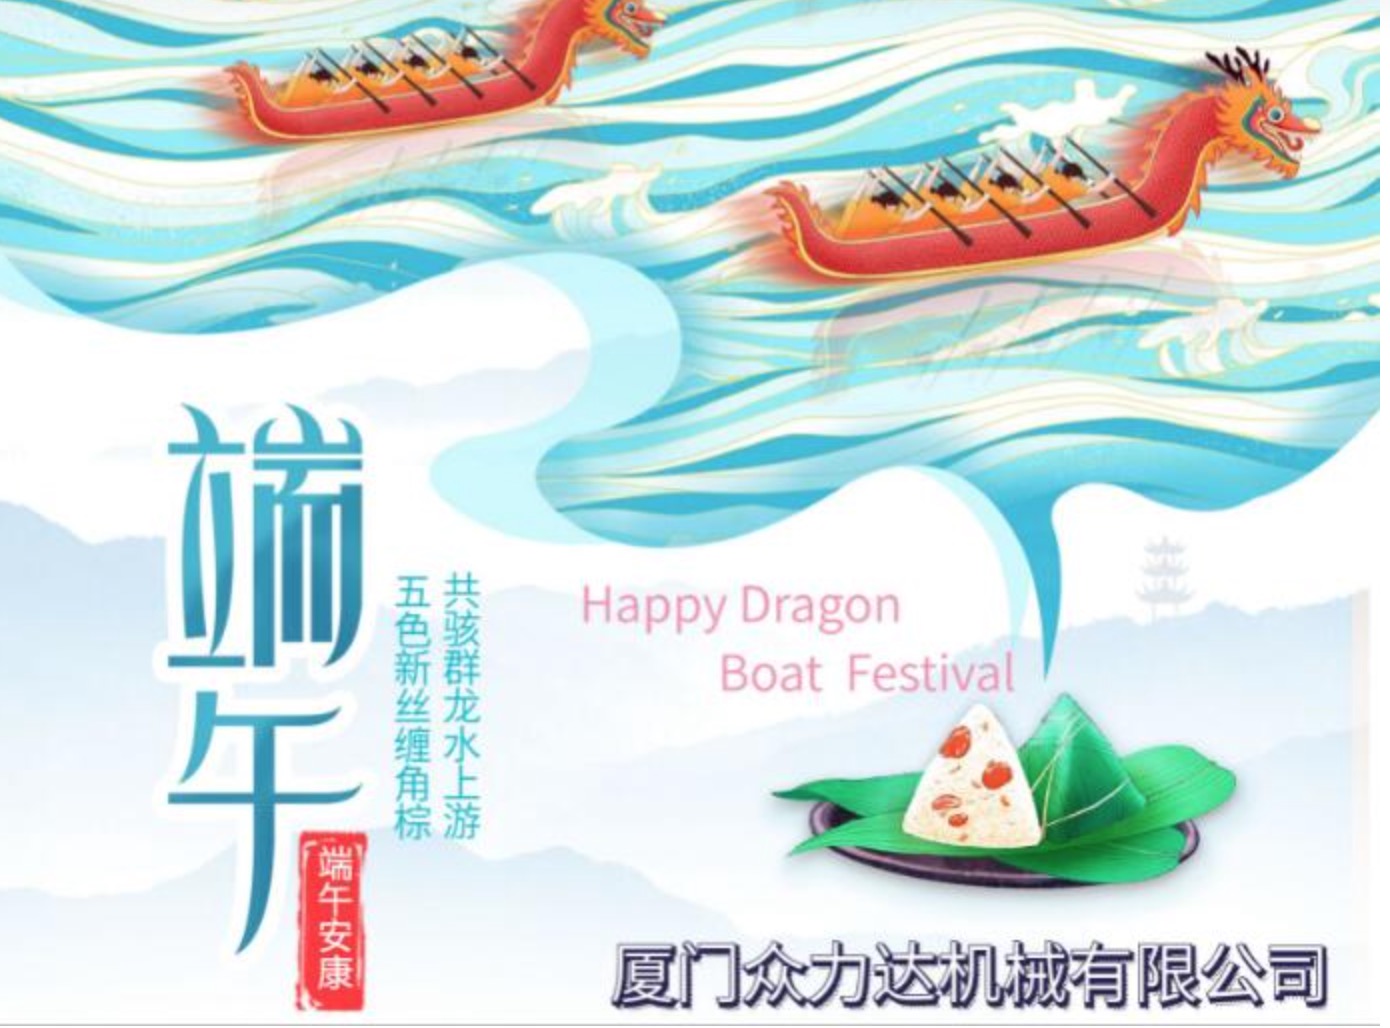 Festival de bateau de dragon